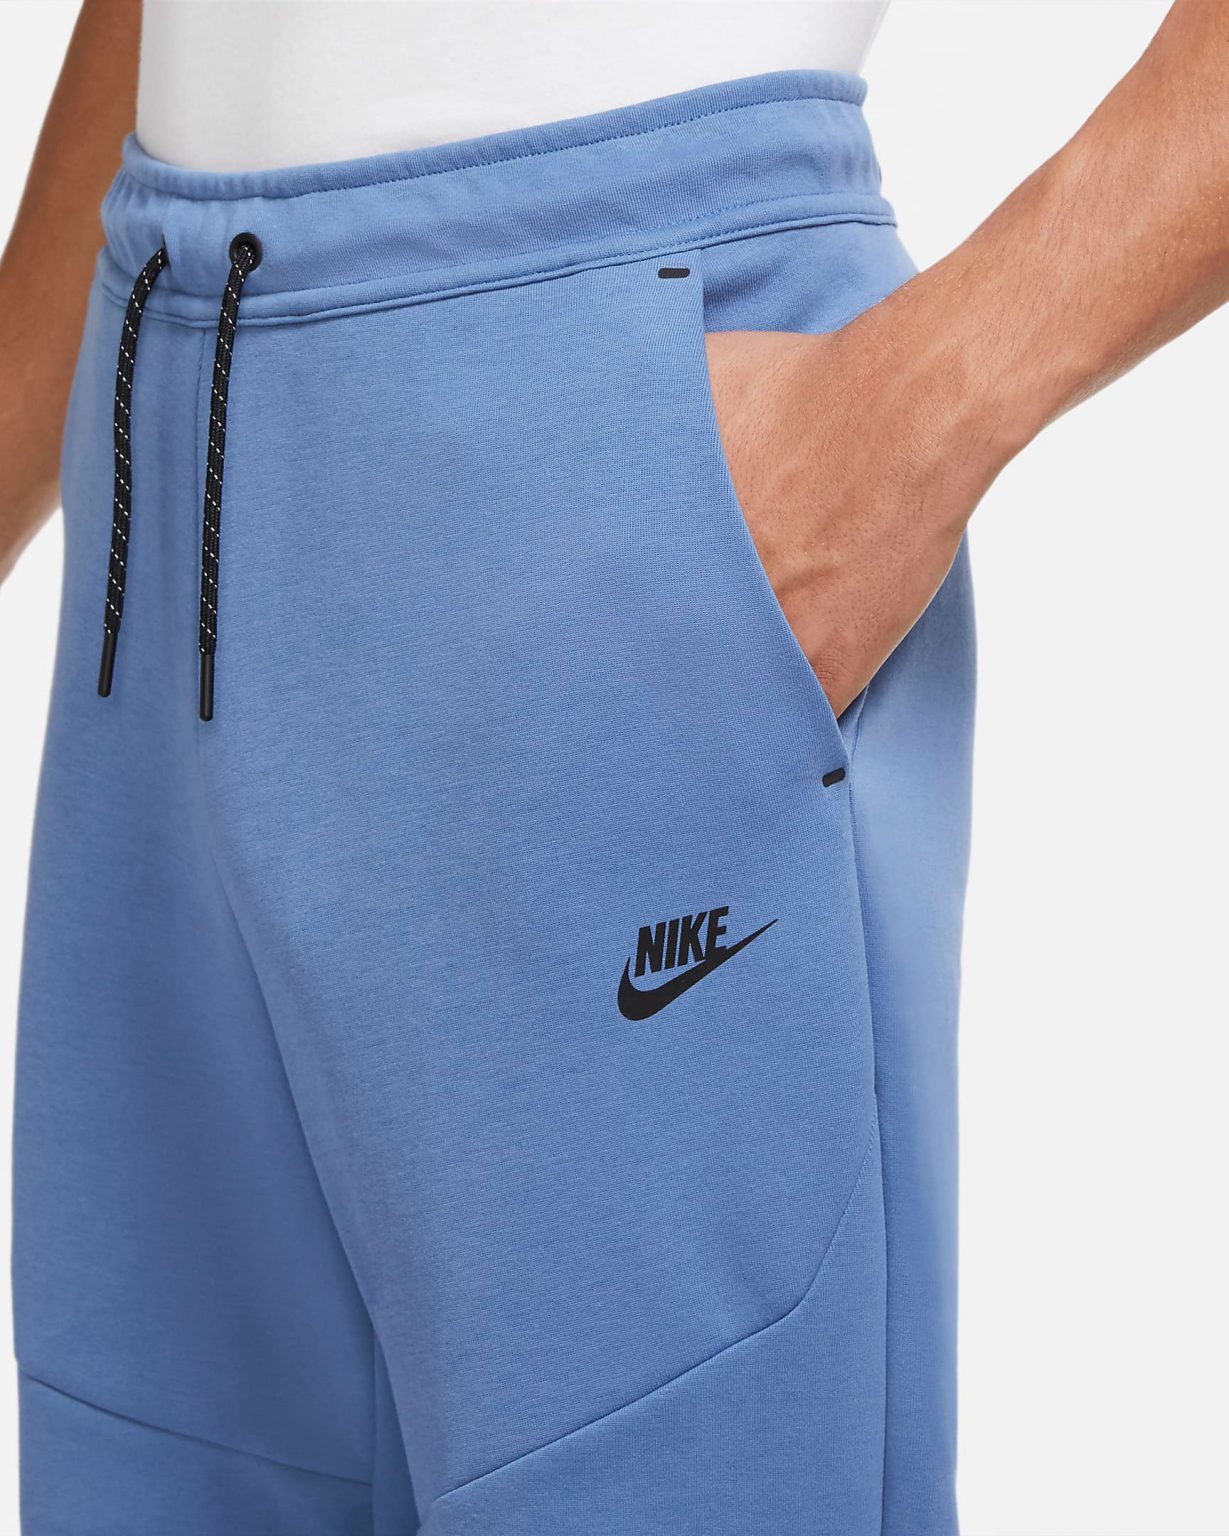 Nike Tech Fleece Jogger Pants for Fall 2020 | SportFits.com